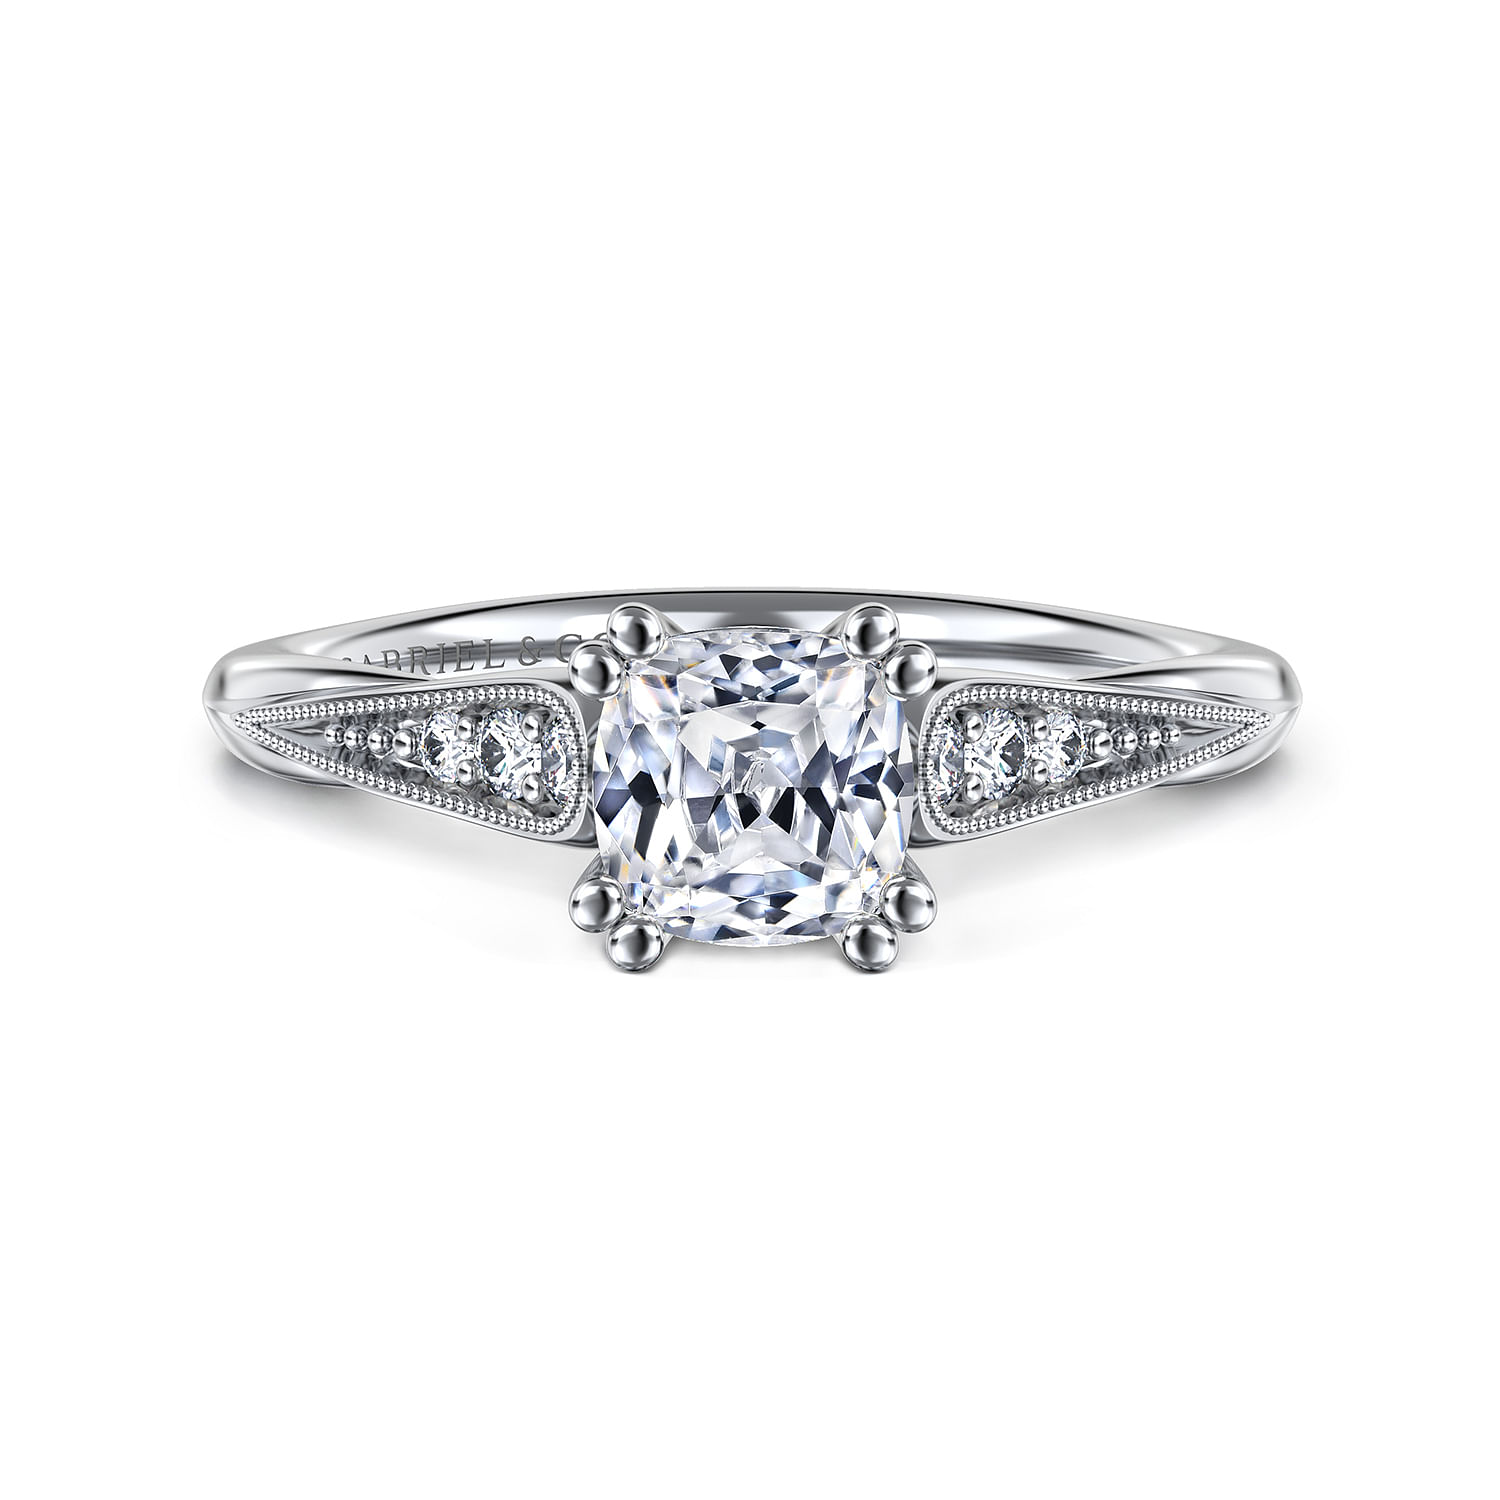 Riley - 14K White Gold Cushion Cut Diamond Engagement Ring